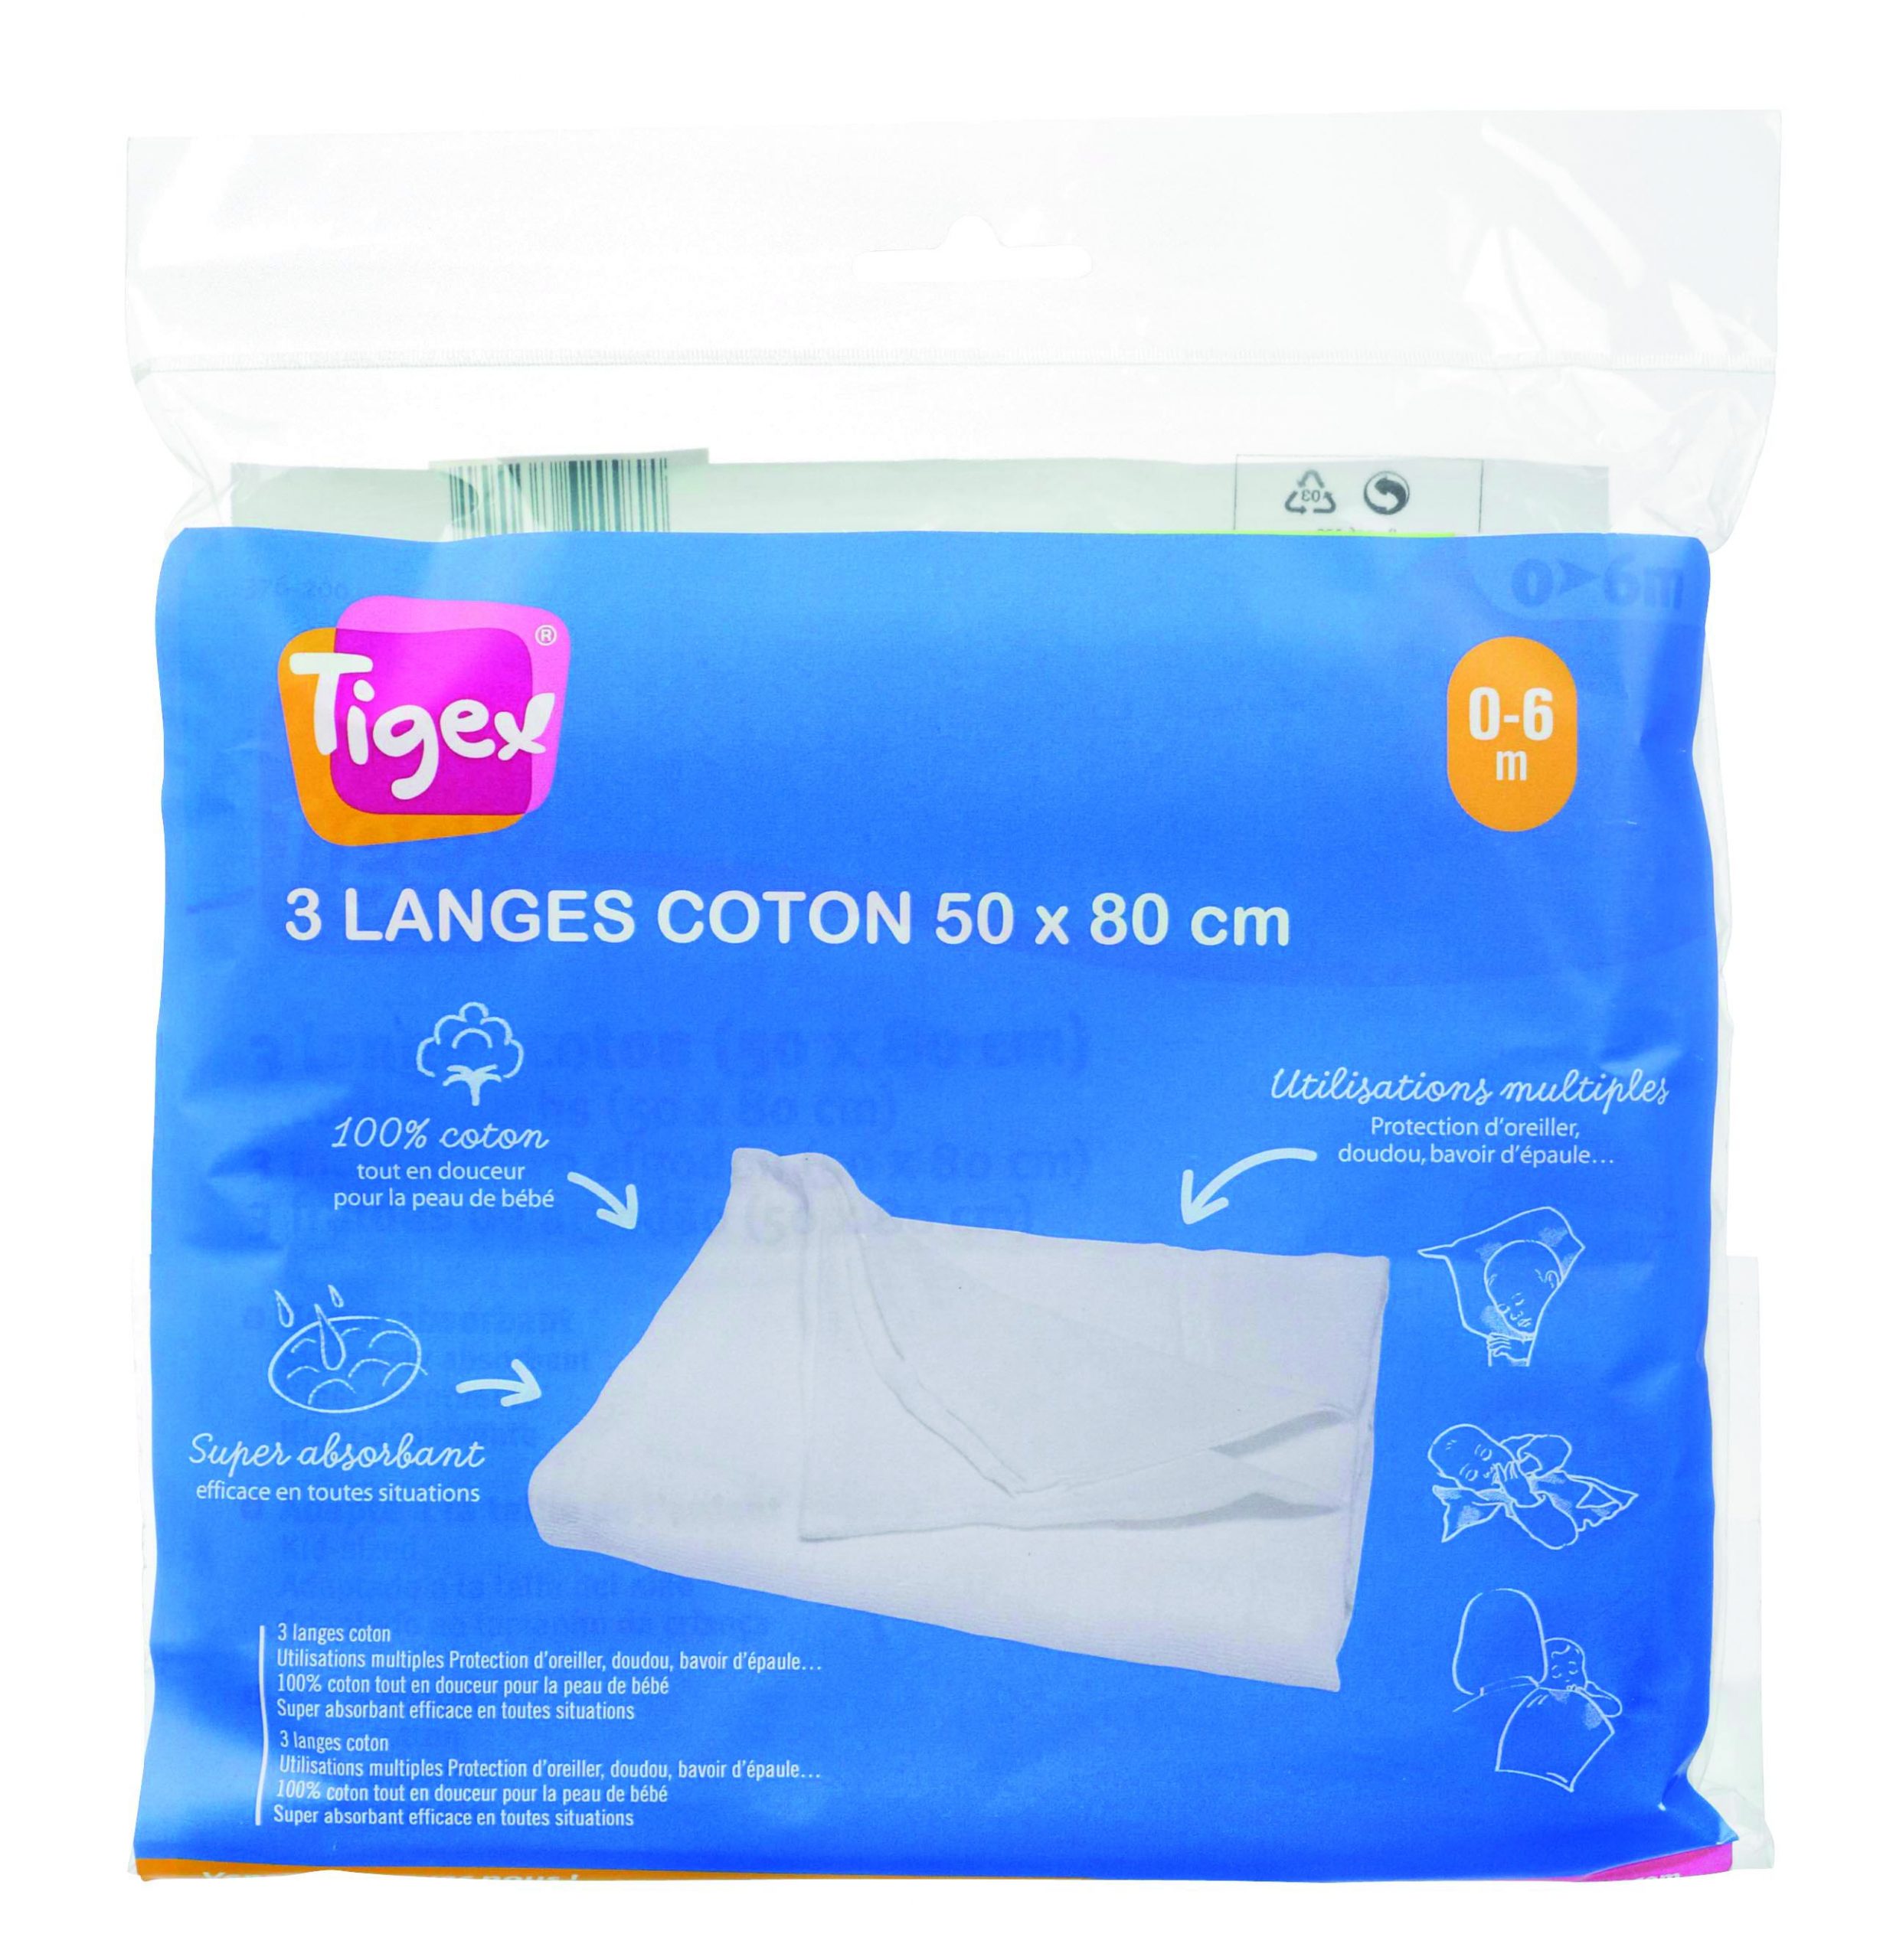 3 langes coton 50 x 80 cm - Tigex